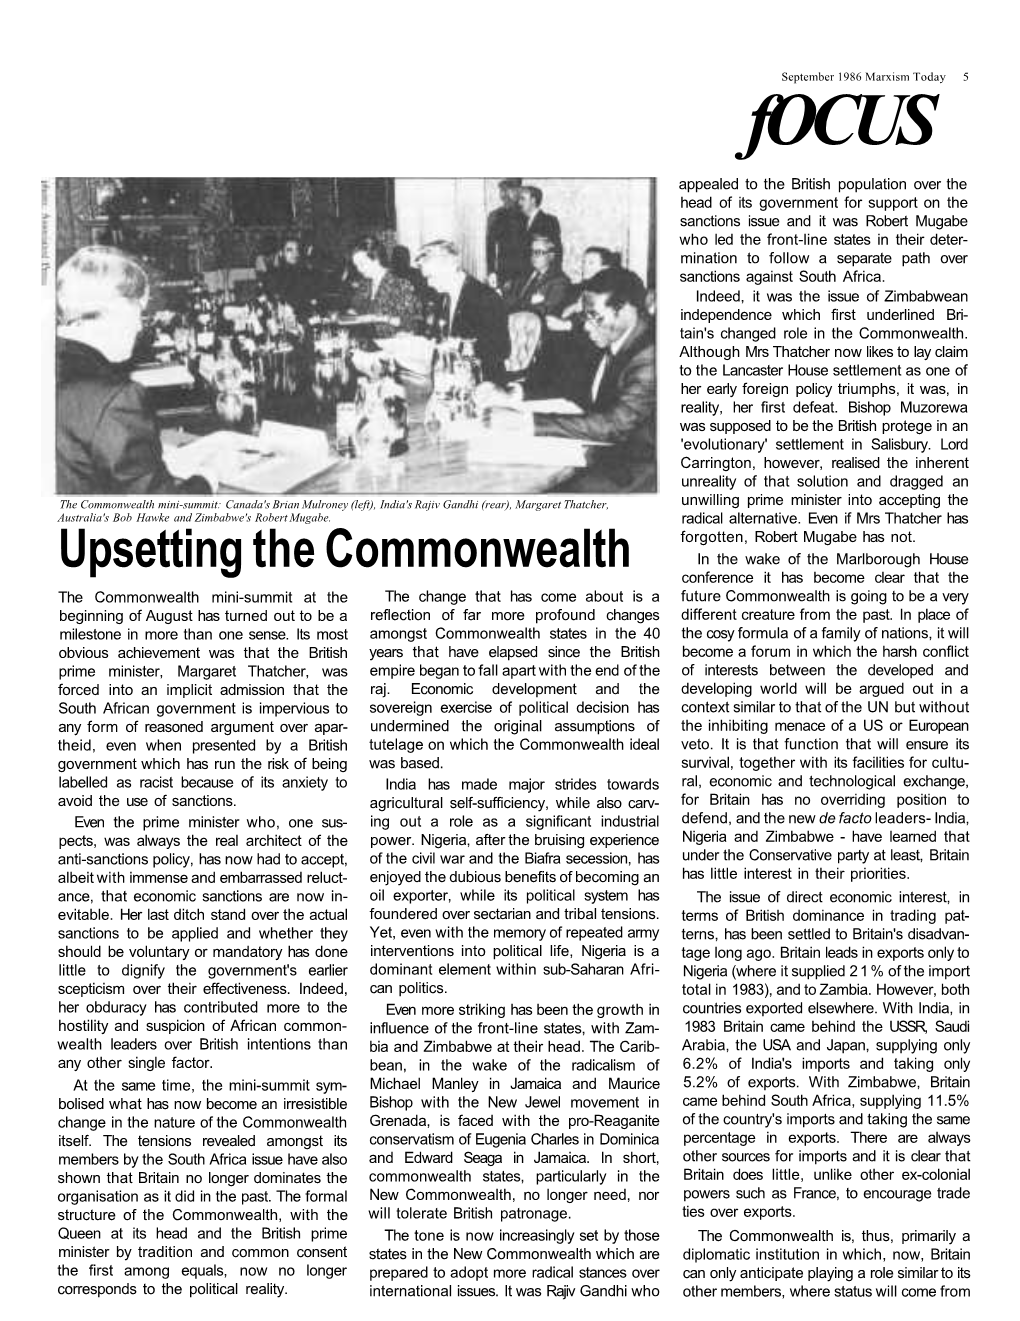 Upsetting the Commonwealth